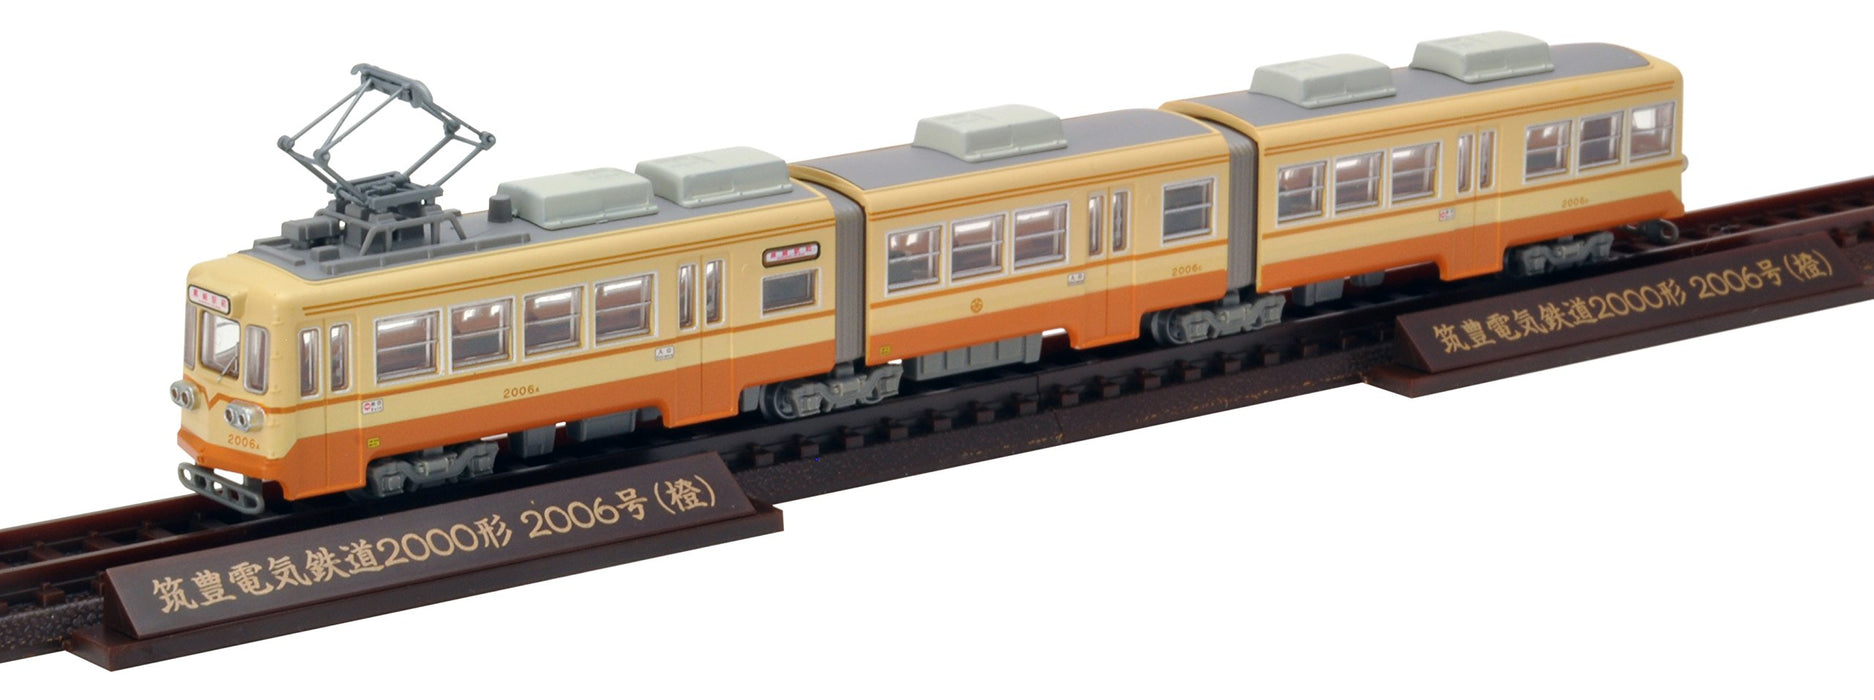 Tomytec Geocolle Railway Collection - Chikuho Electric 2000 2006 Type Orange